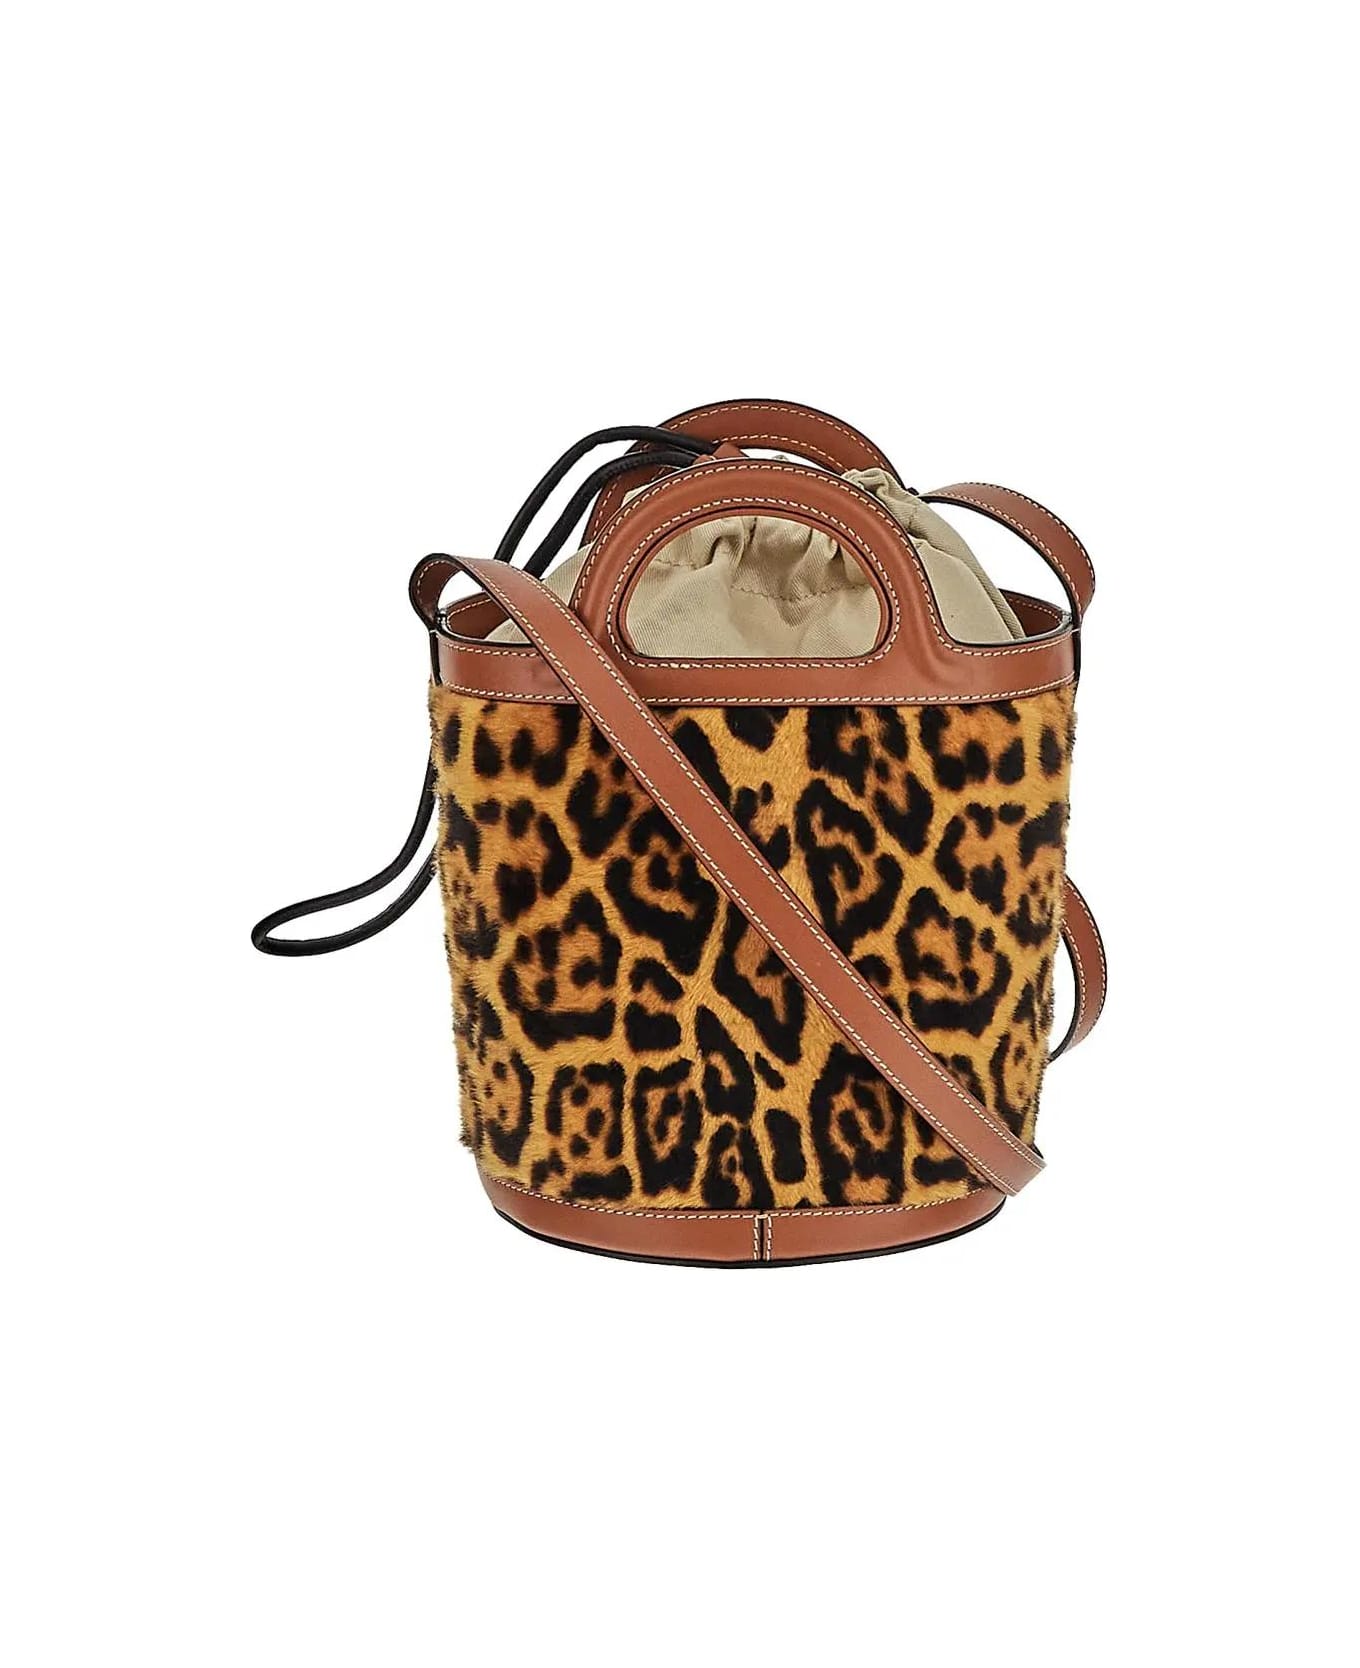 Marni Leopard Bucket Bag - Spotted